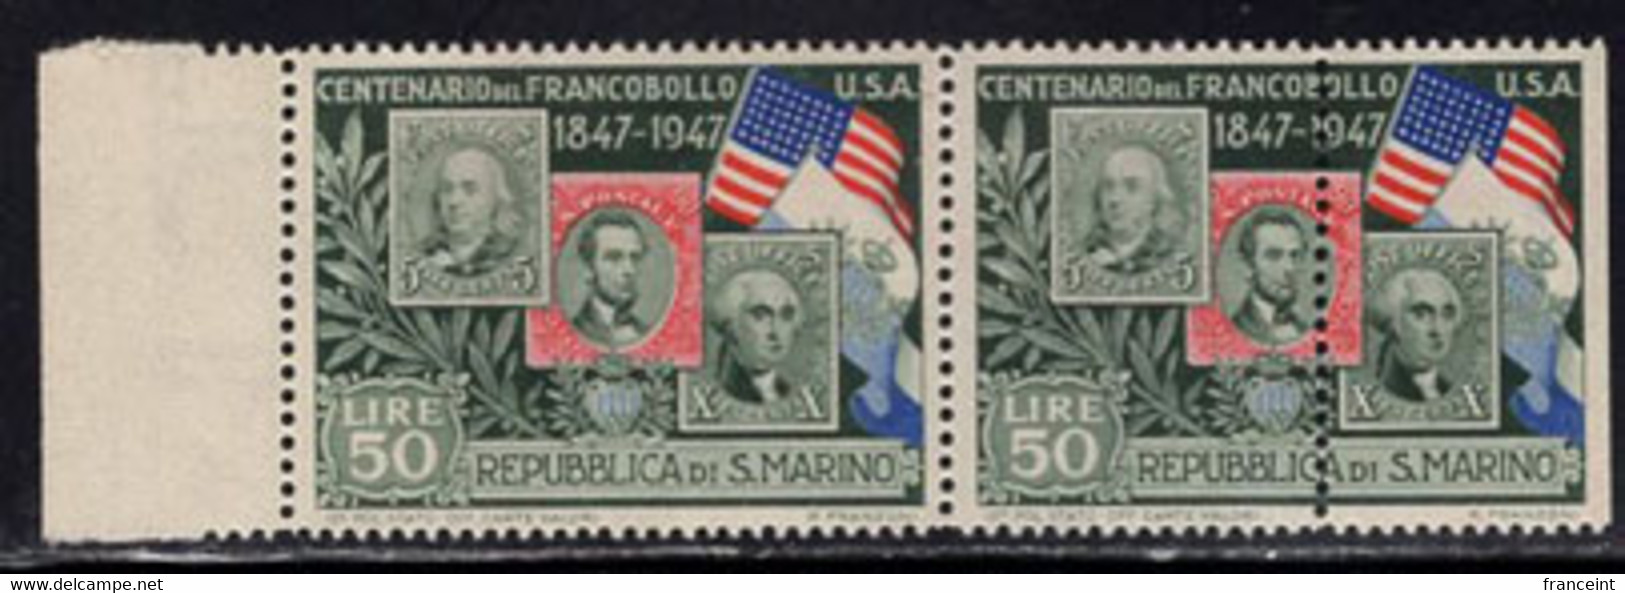 SAN MARINO(1947) US Stamps. Flag. Pair Misperforated Vertically. Scott No 271, Yvert No 313. - Variedades Y Curiosidades